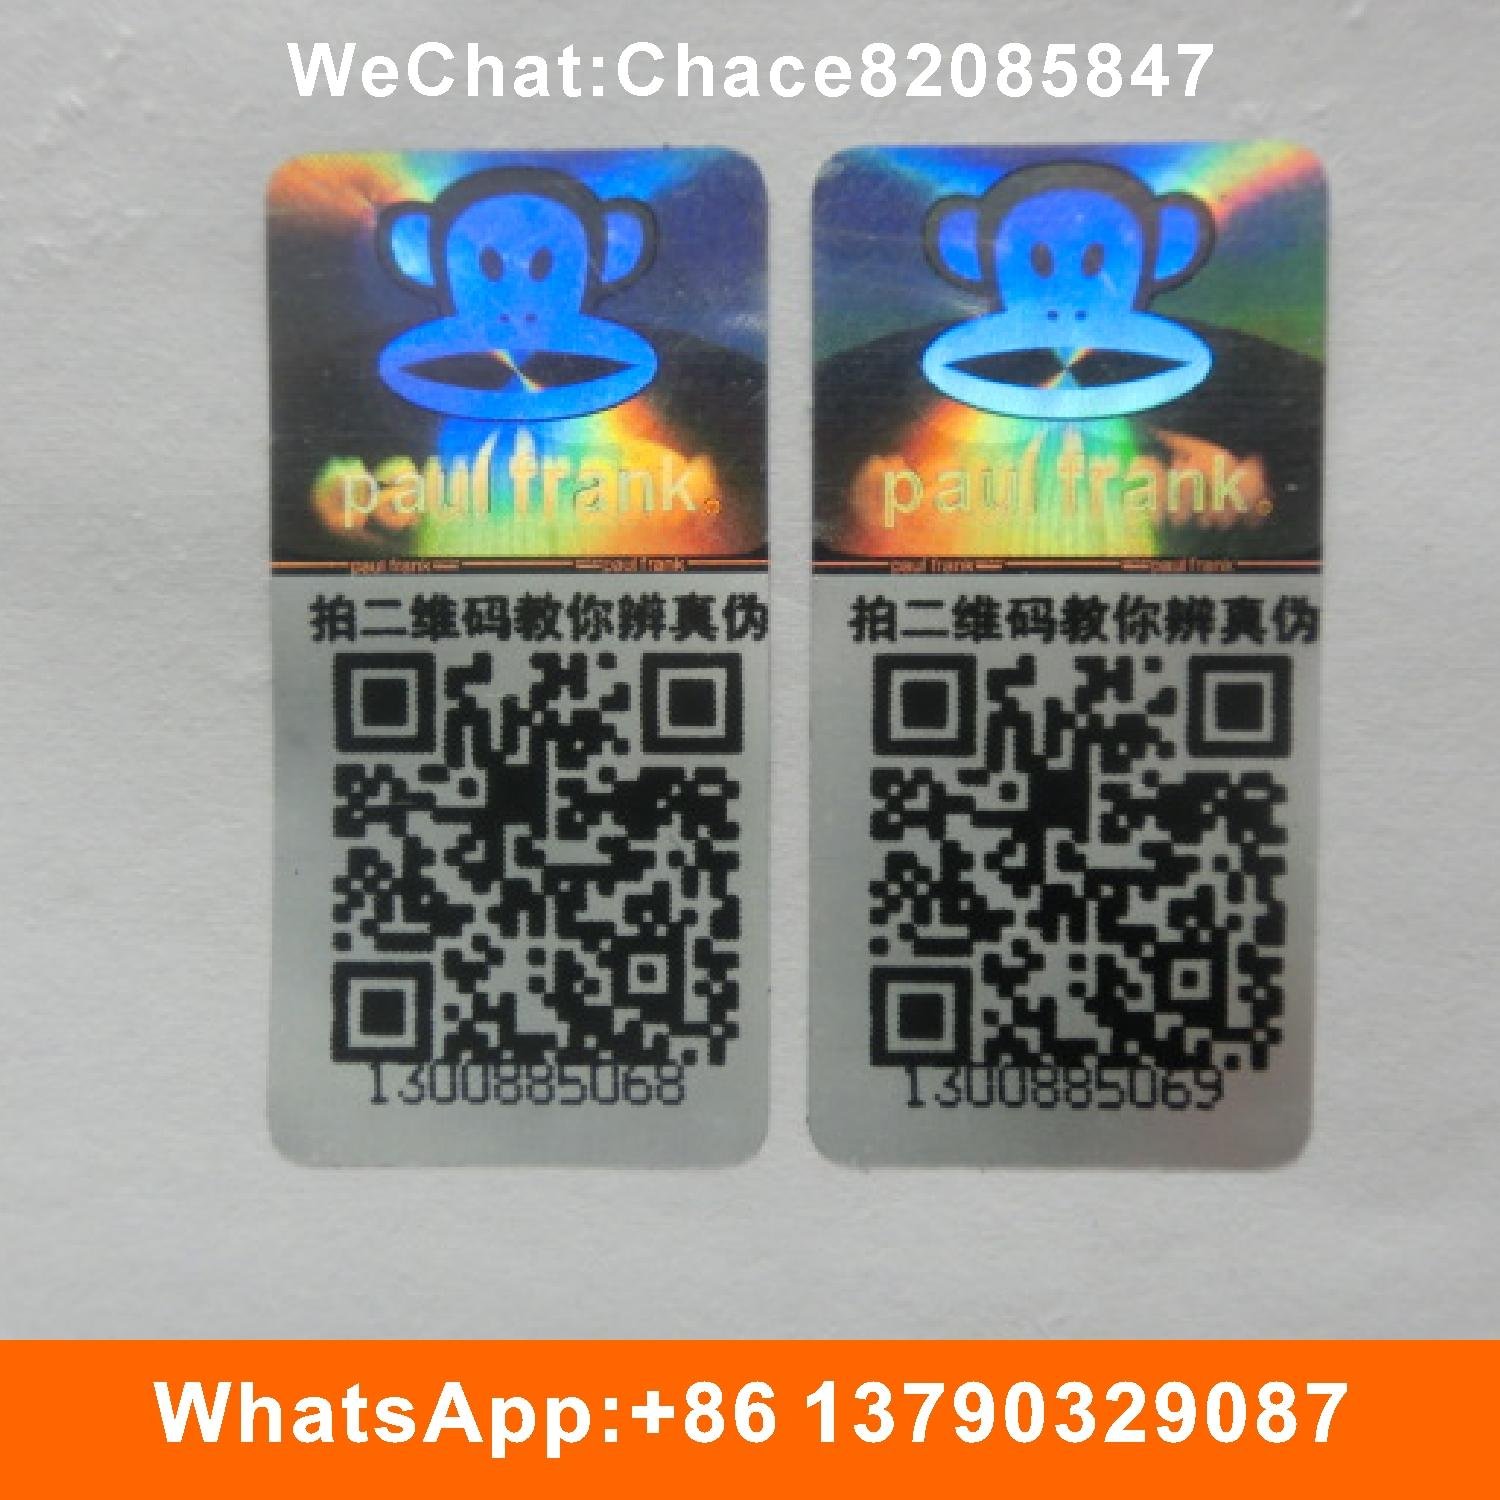 Security Anti-Fake Qr code Hologram Sticker 2